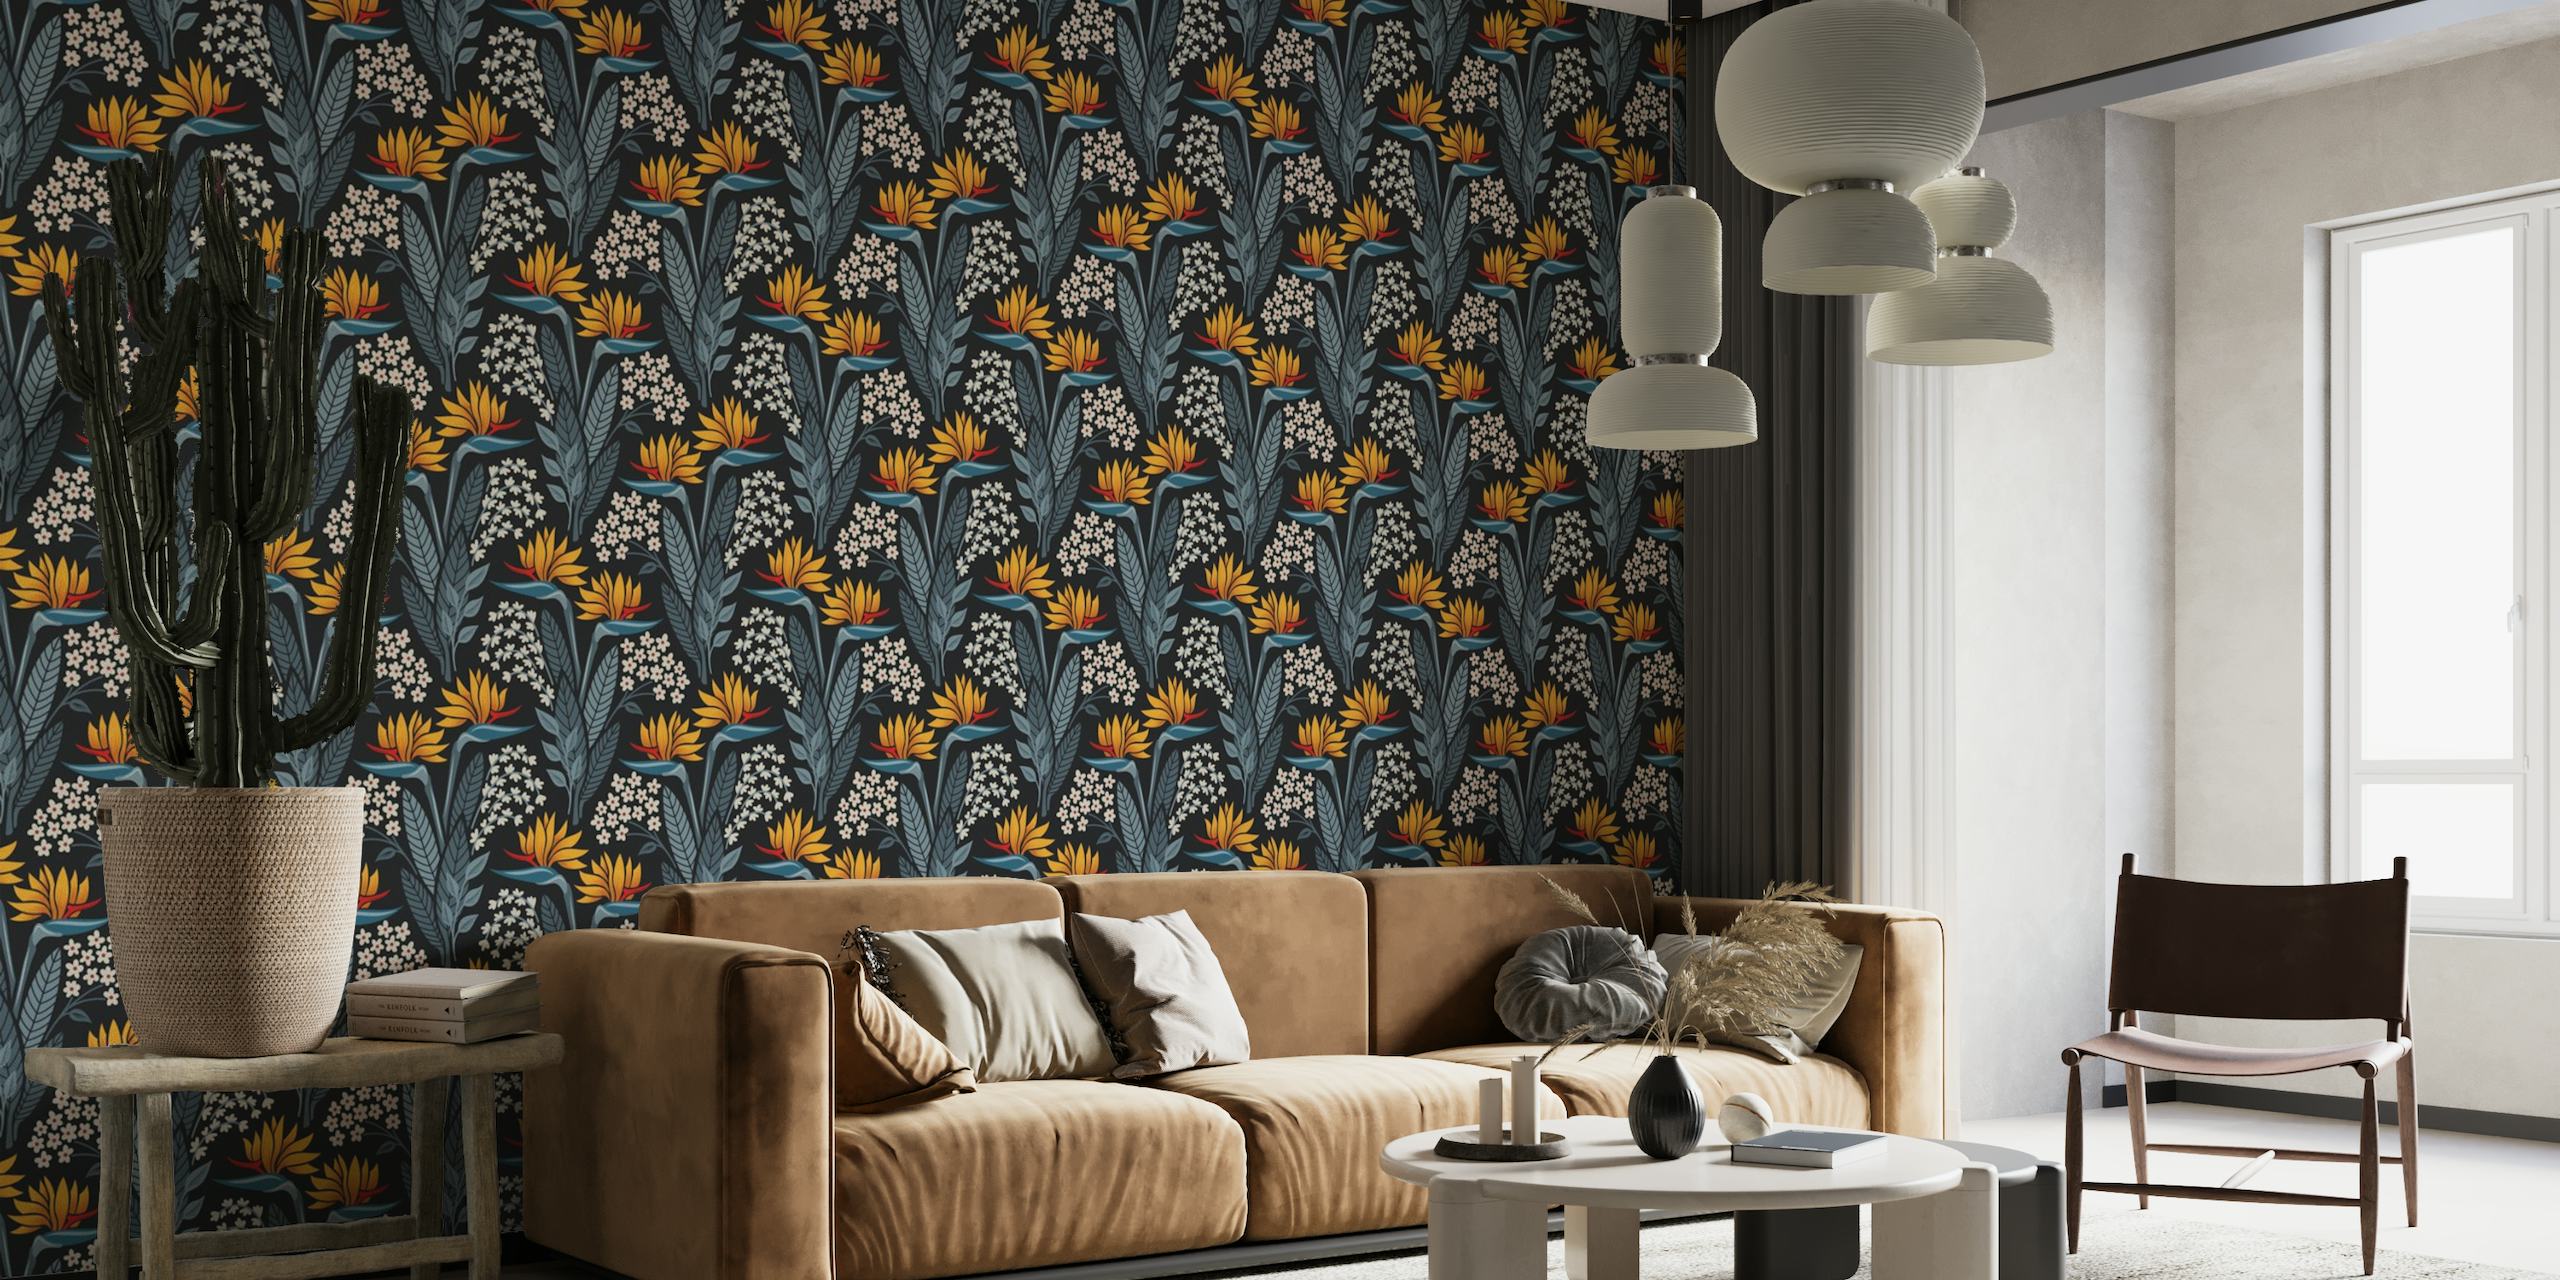 2302 - grey yellow strelitzia / bird of paradise wallpaper